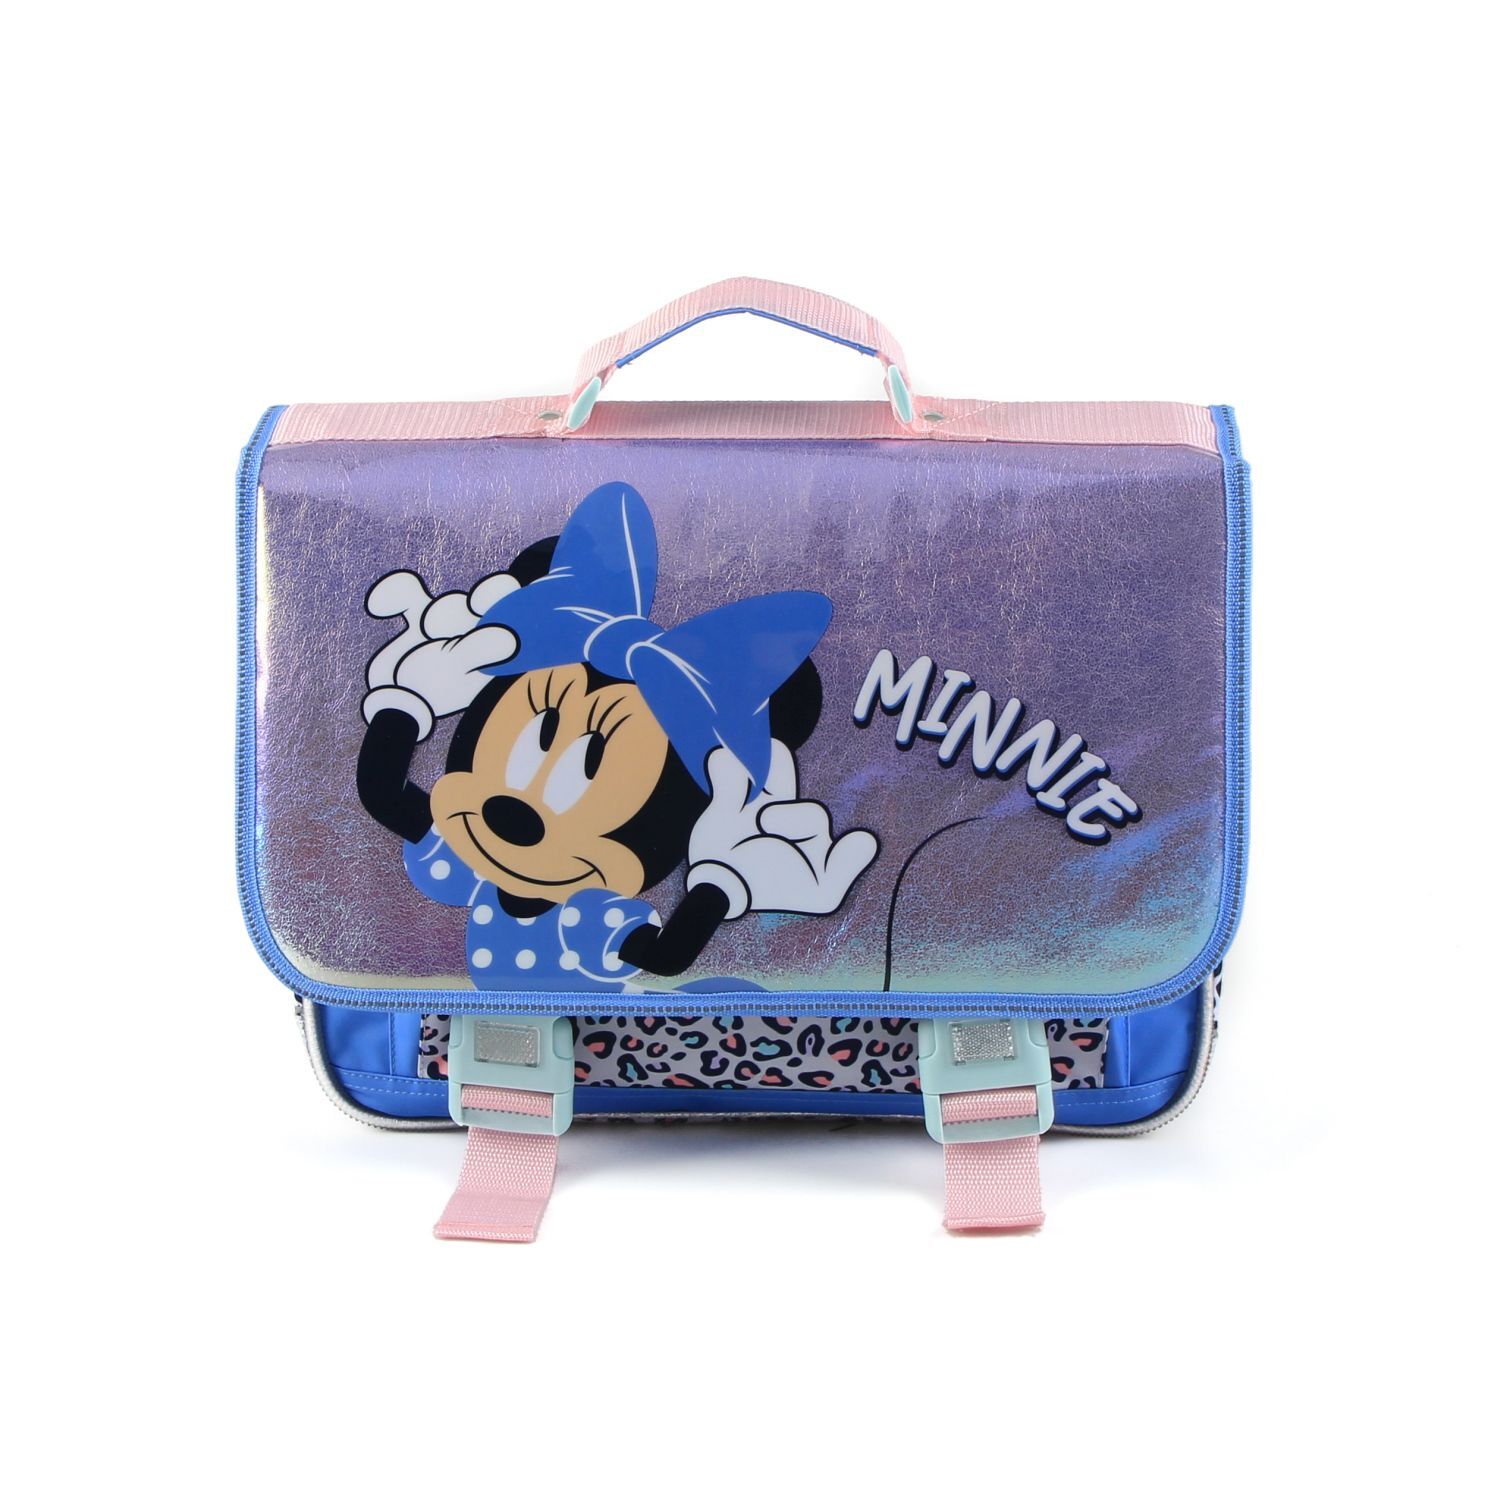 Рюкзак Disney Minnie Mouse Minnie Maus Leopard Schul Blaue Schleife 41cm, синий домик для животных disney minnie 500 400 400мм 50см